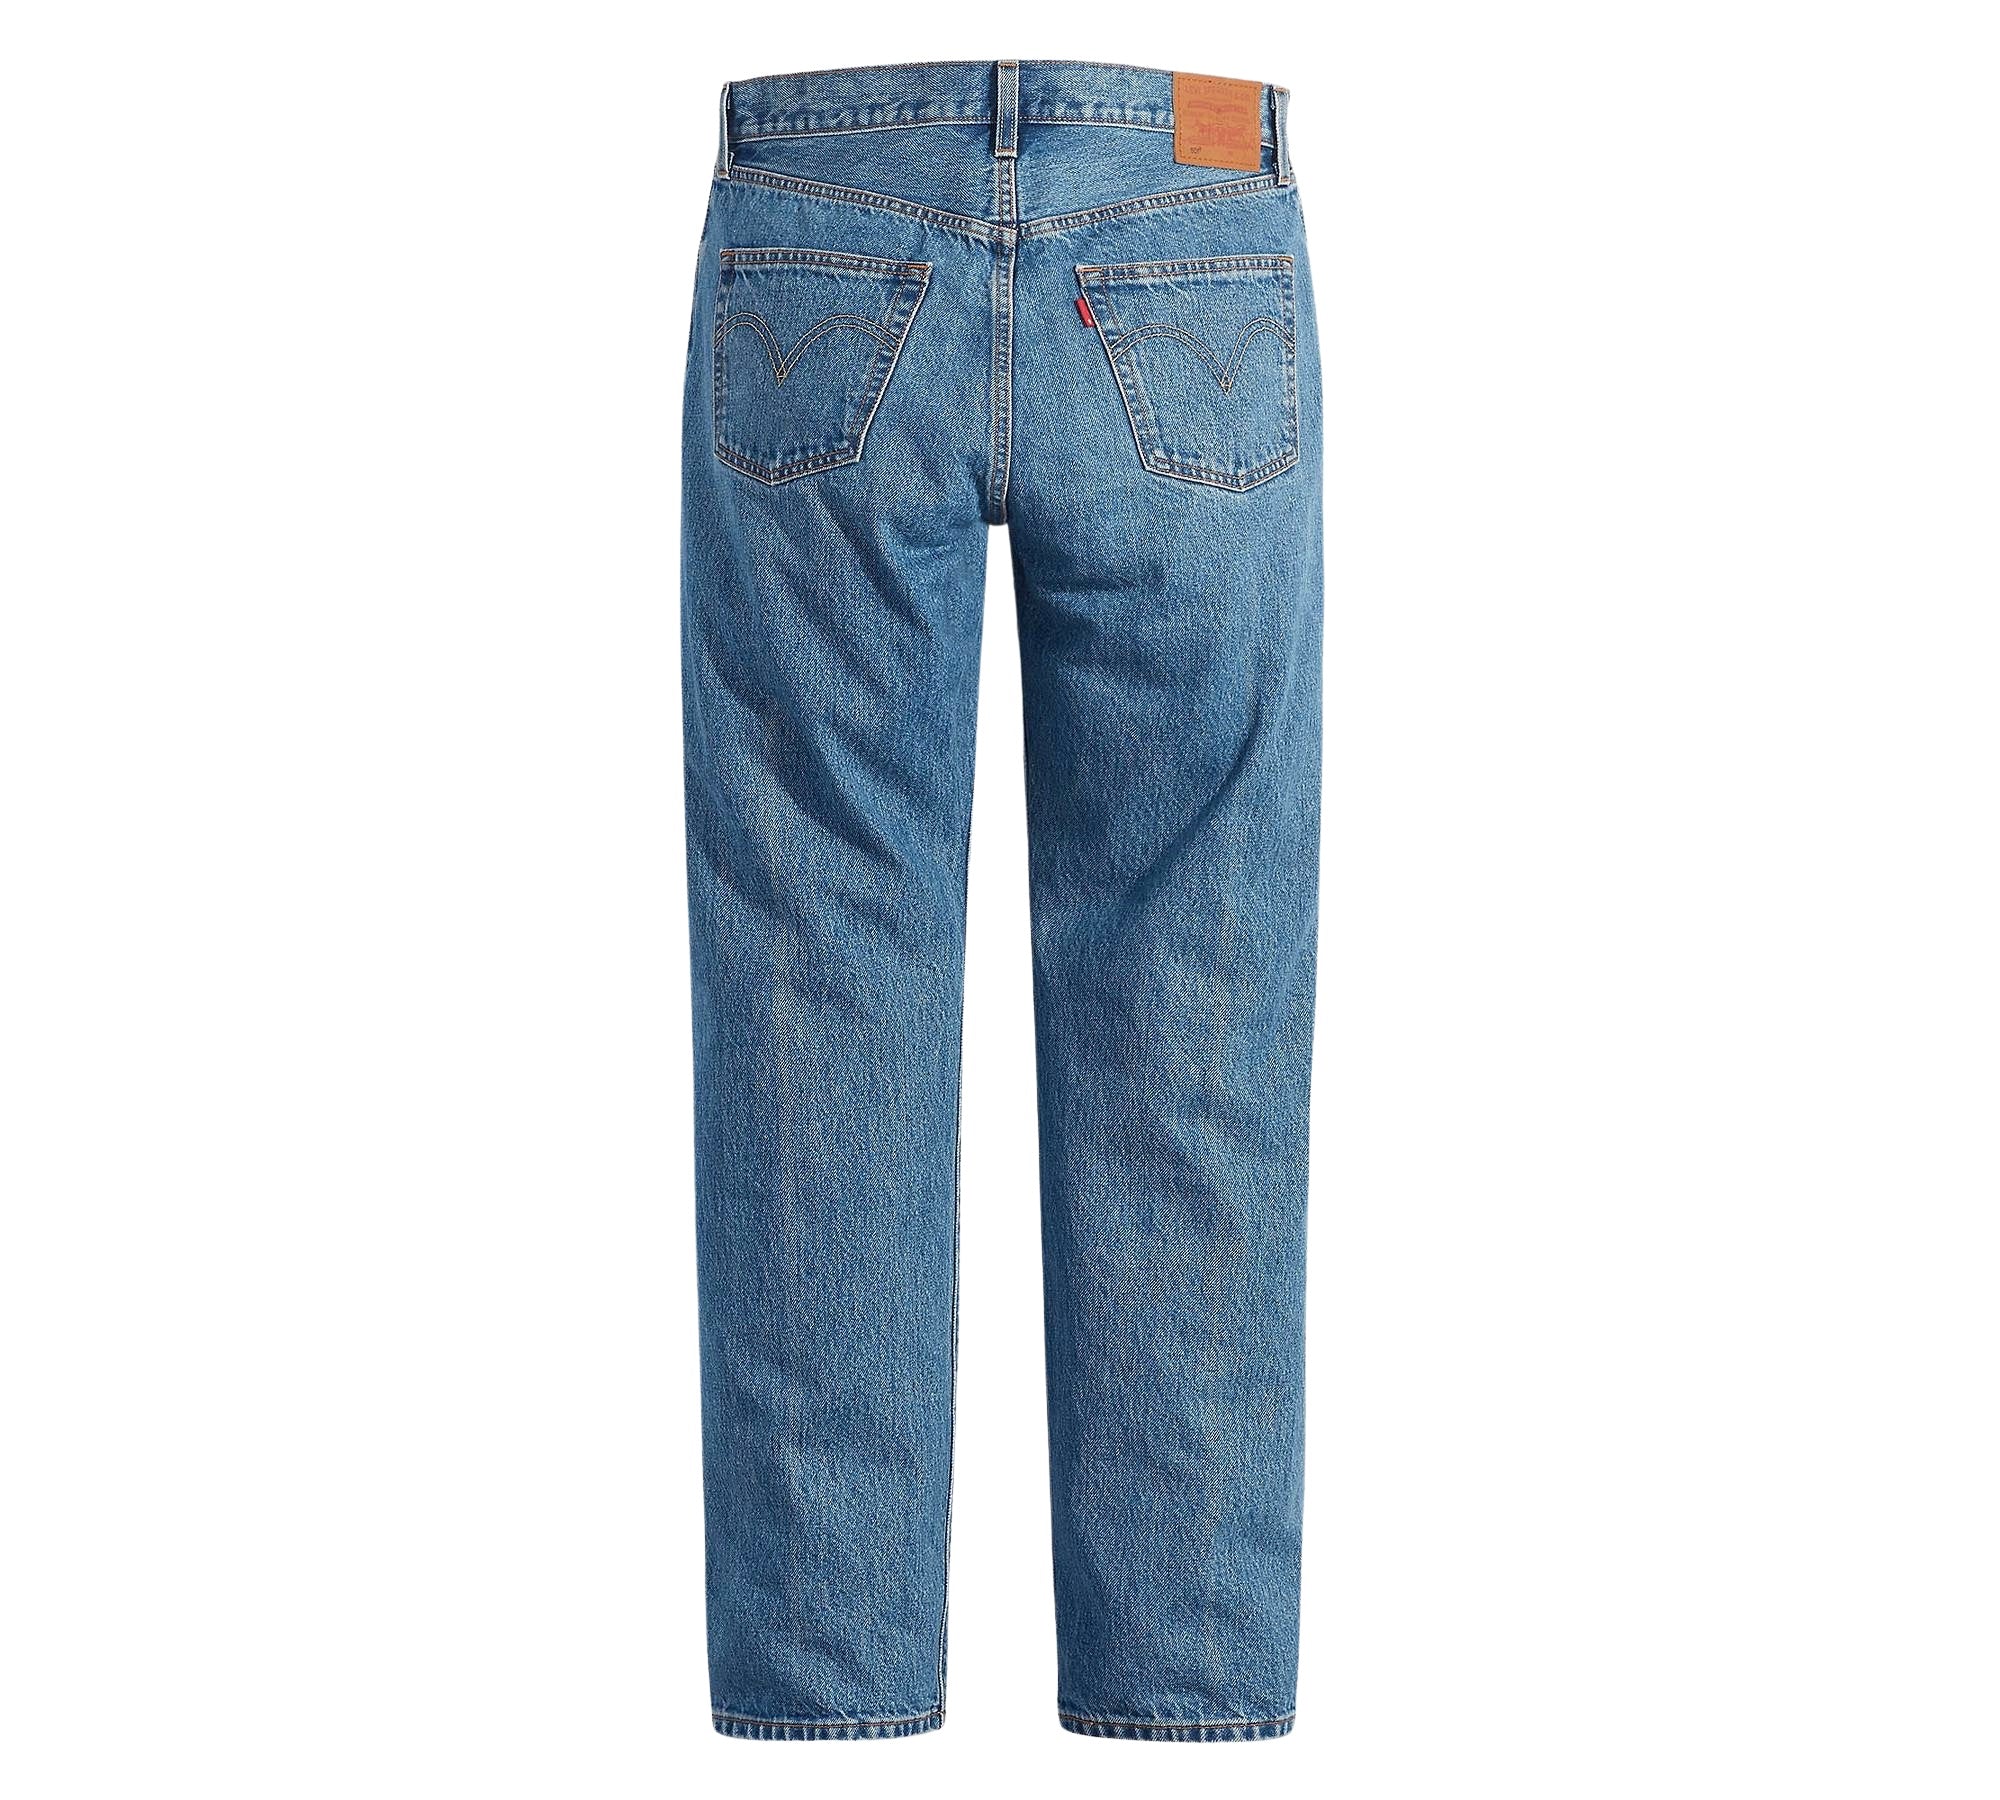 4 Pack - Vintage LEVI'S Classic Blue Zip Fly Jeans - Waist 44 - Length 32 - Vintage Superstore Online